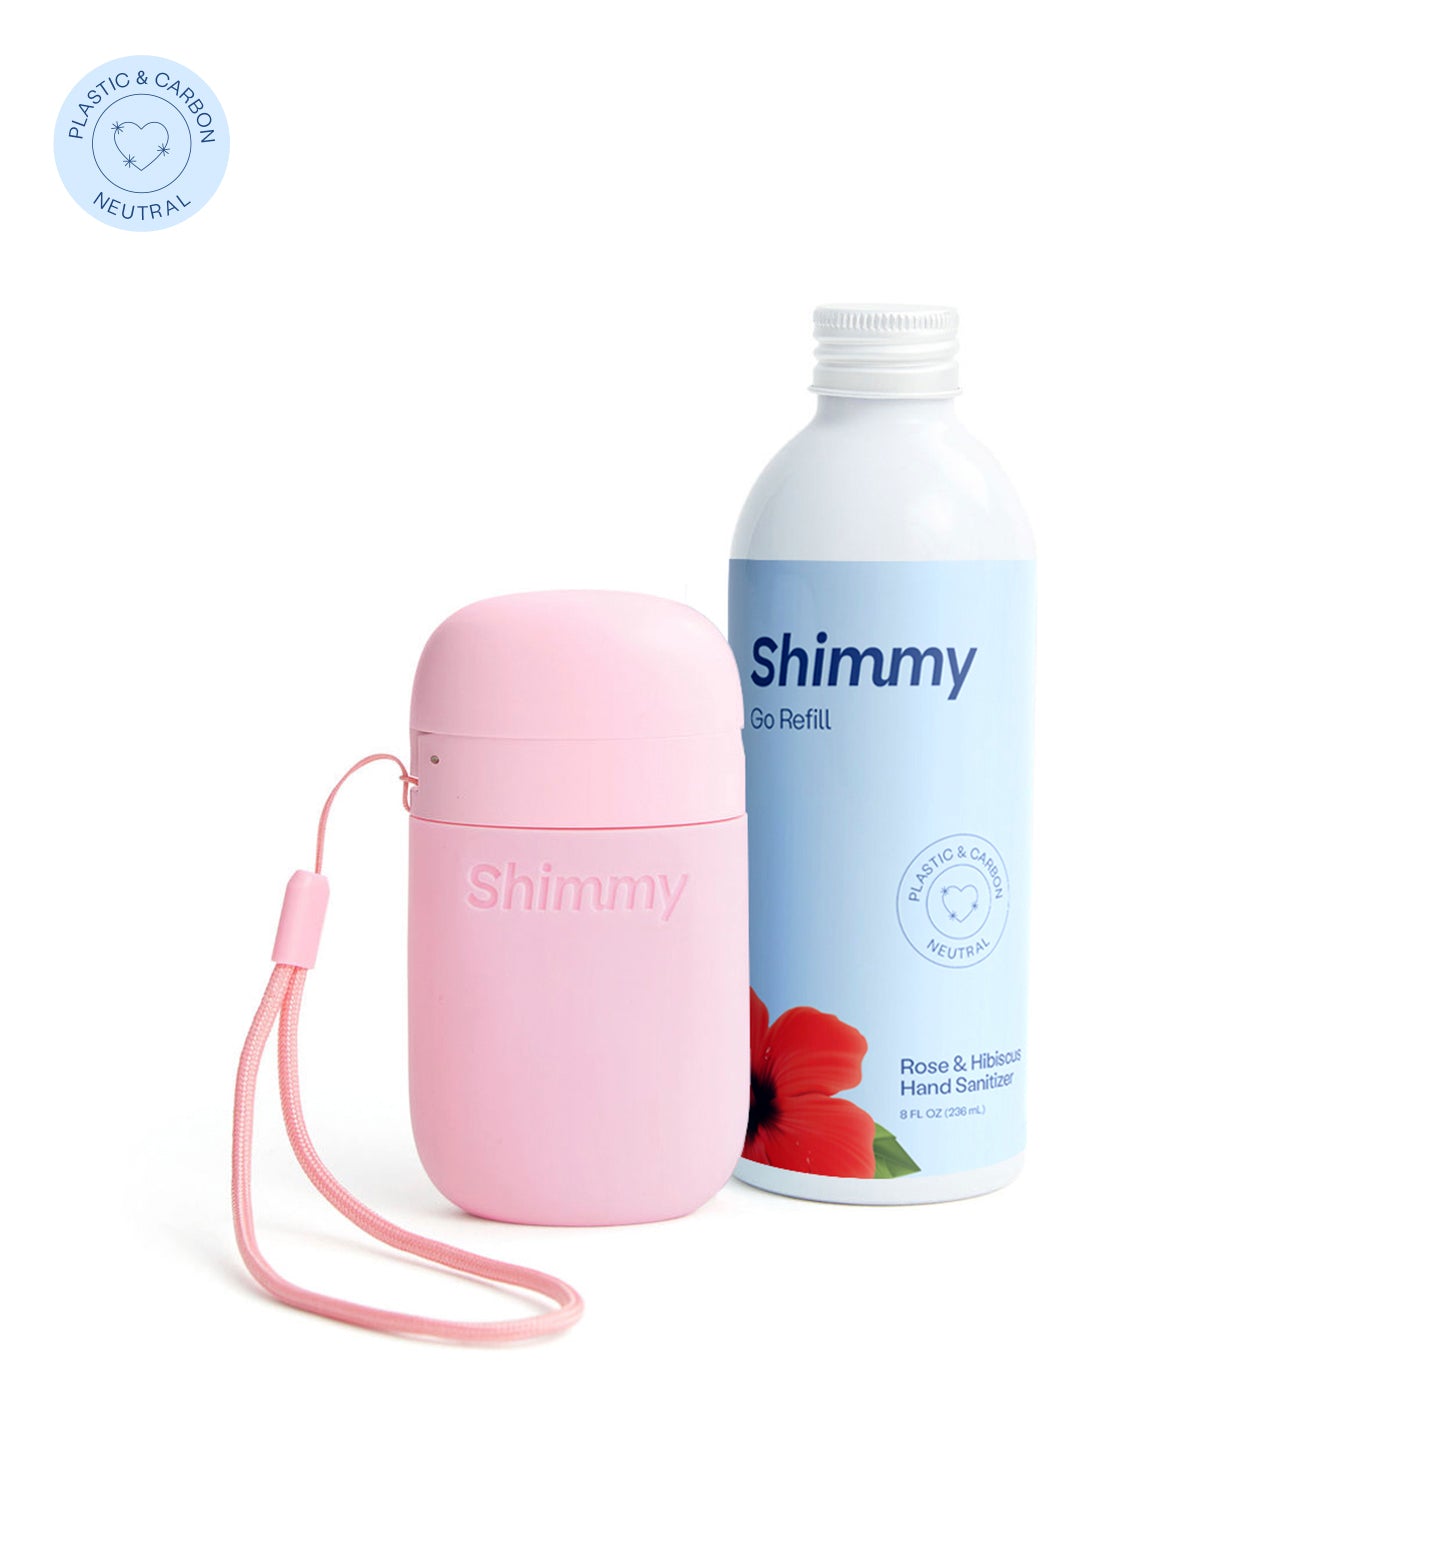 Shimmy Go Portable Hand Sanitizer Dispenser Soft Pink + Rose & Hibiscus Hand Sanitizer [40734812438719] - 